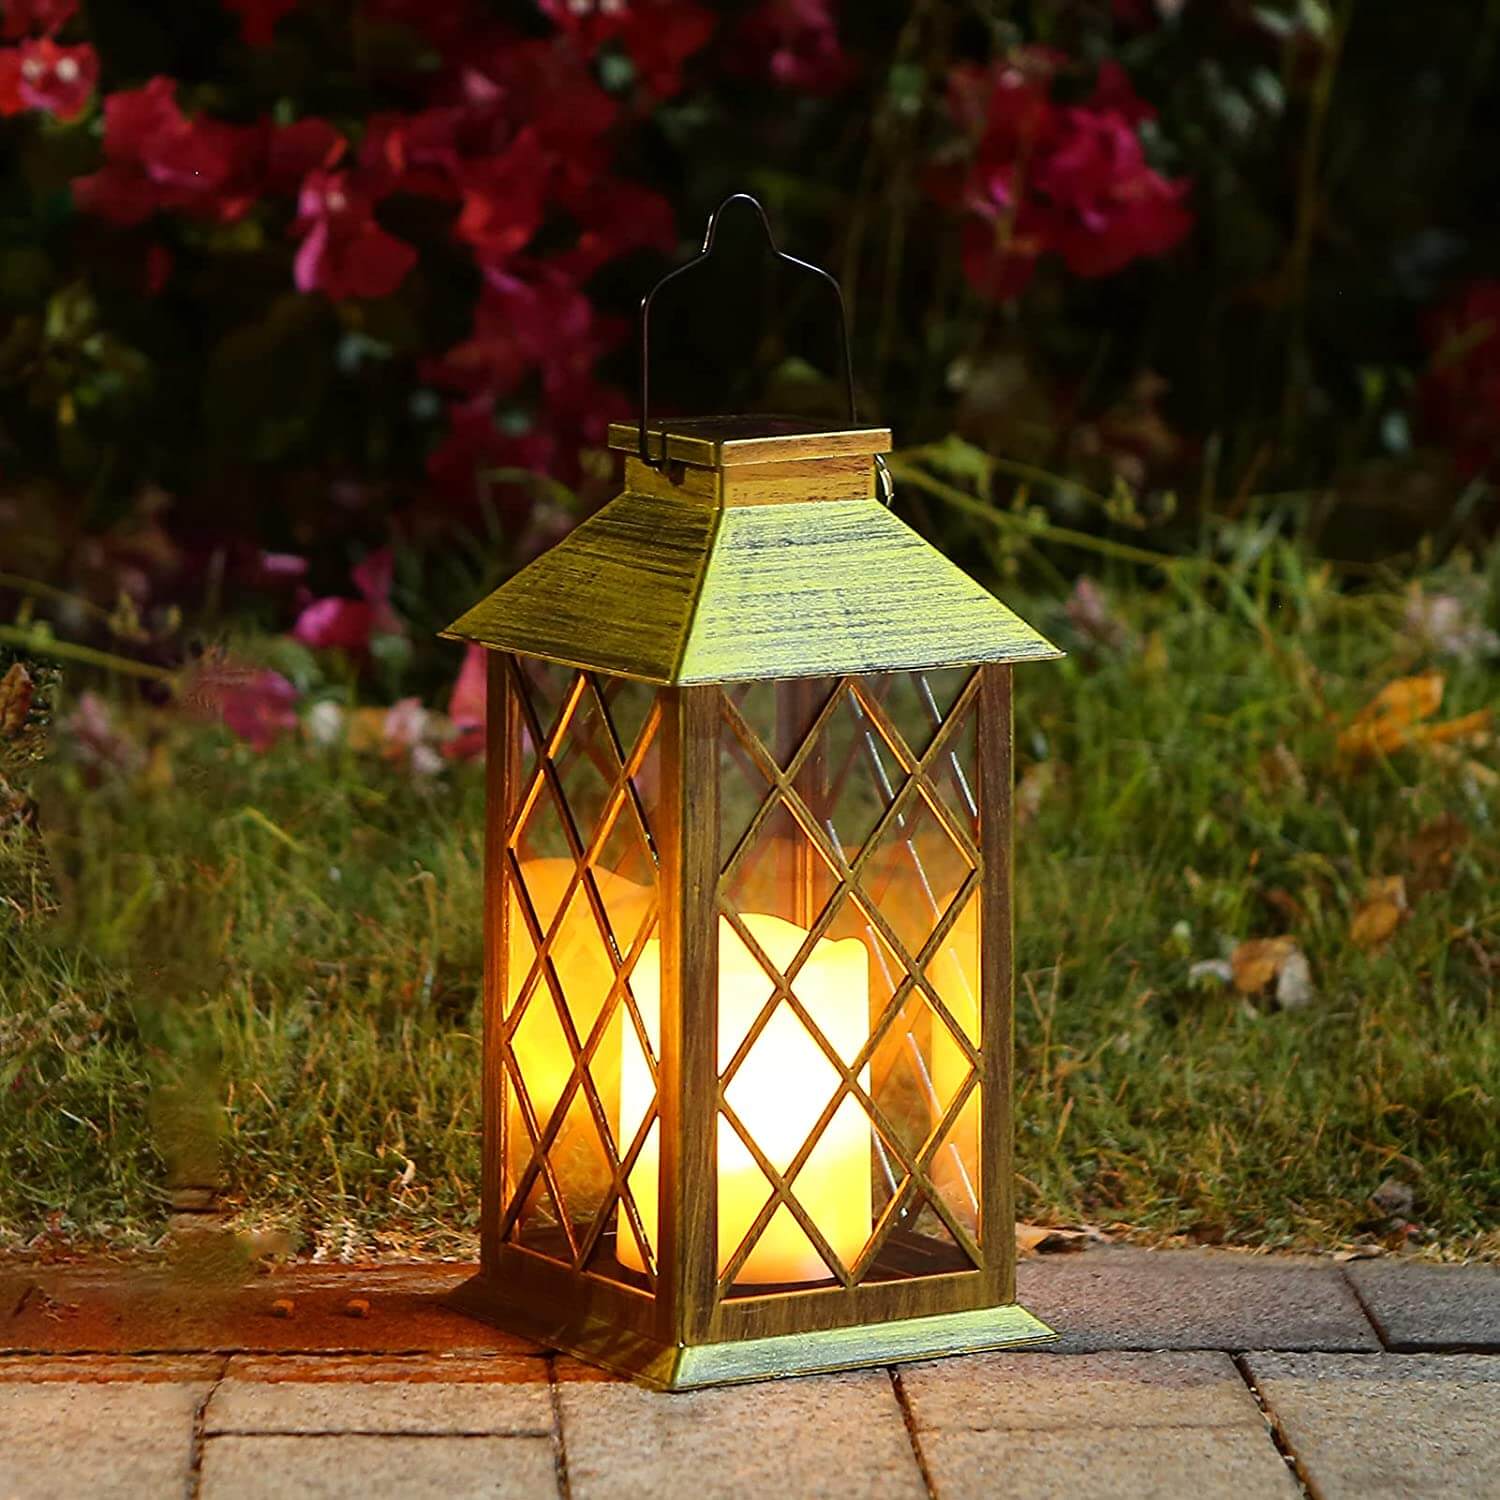 Tomshine Solar Lights Outdoor Decorative Candle Light